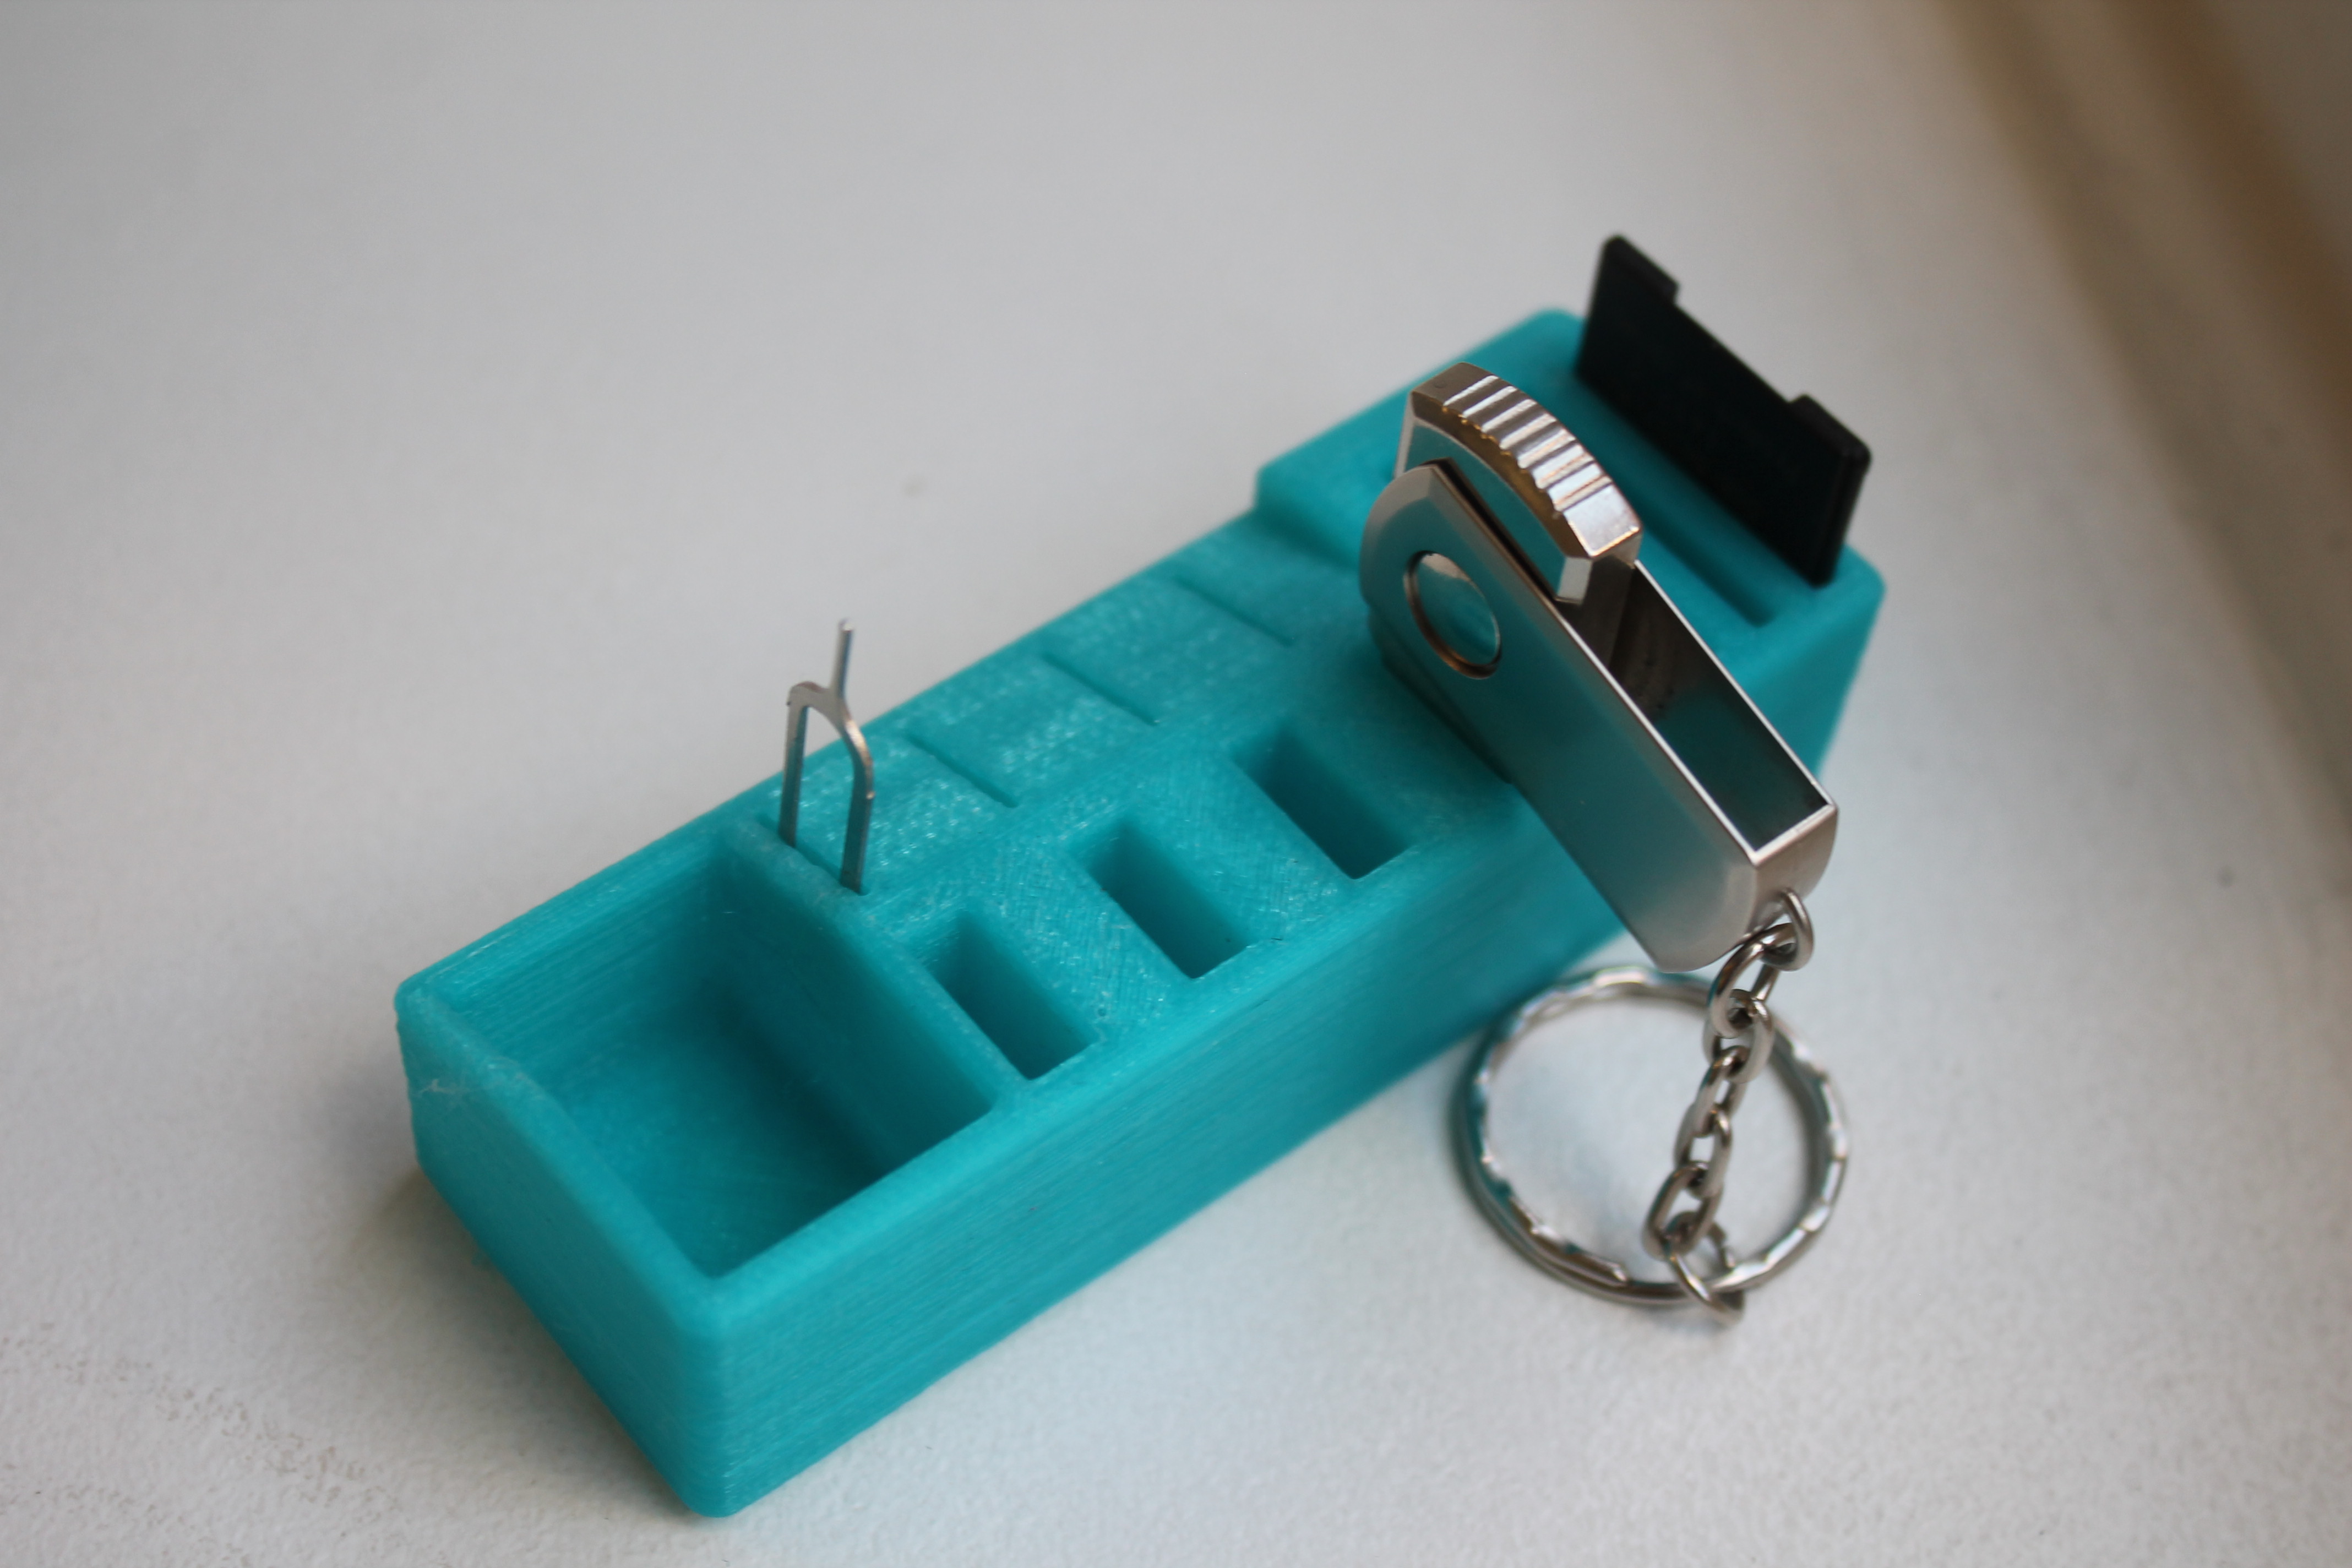 3D Printable USB and SD card holder by antonino furfaro